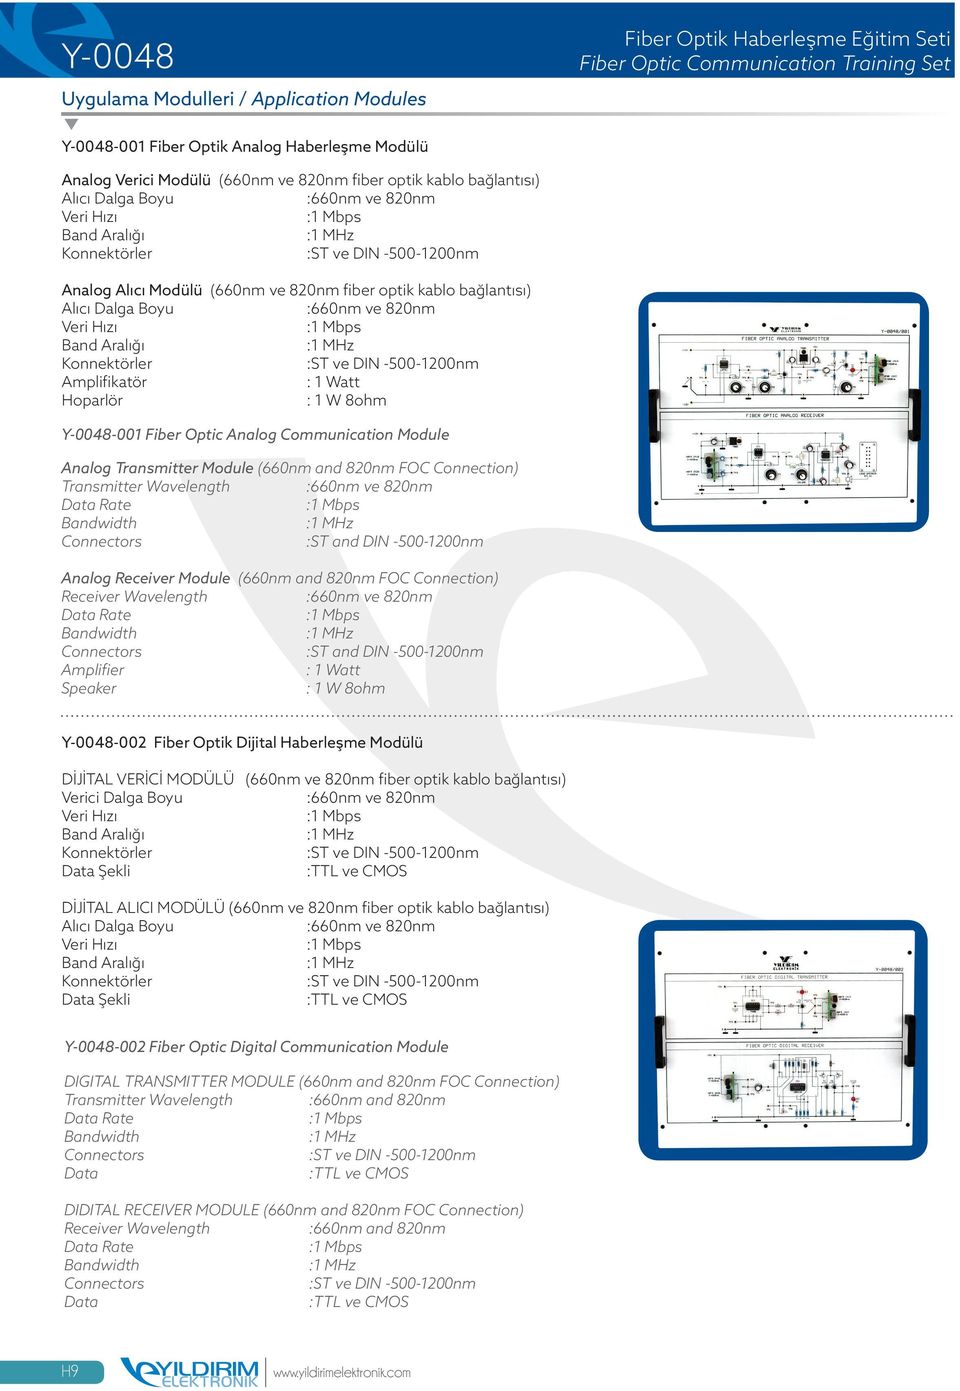 DIN -500-1200nm Analog Receiver Module (660nm and 820nm FOC Connection) Receiver Wavelength :ST and DIN -500-1200nm Amplifier : 1 Watt Speaker : 1 W 8ohm Y-0048-002 Fiber Optik Dijital Haberleşme